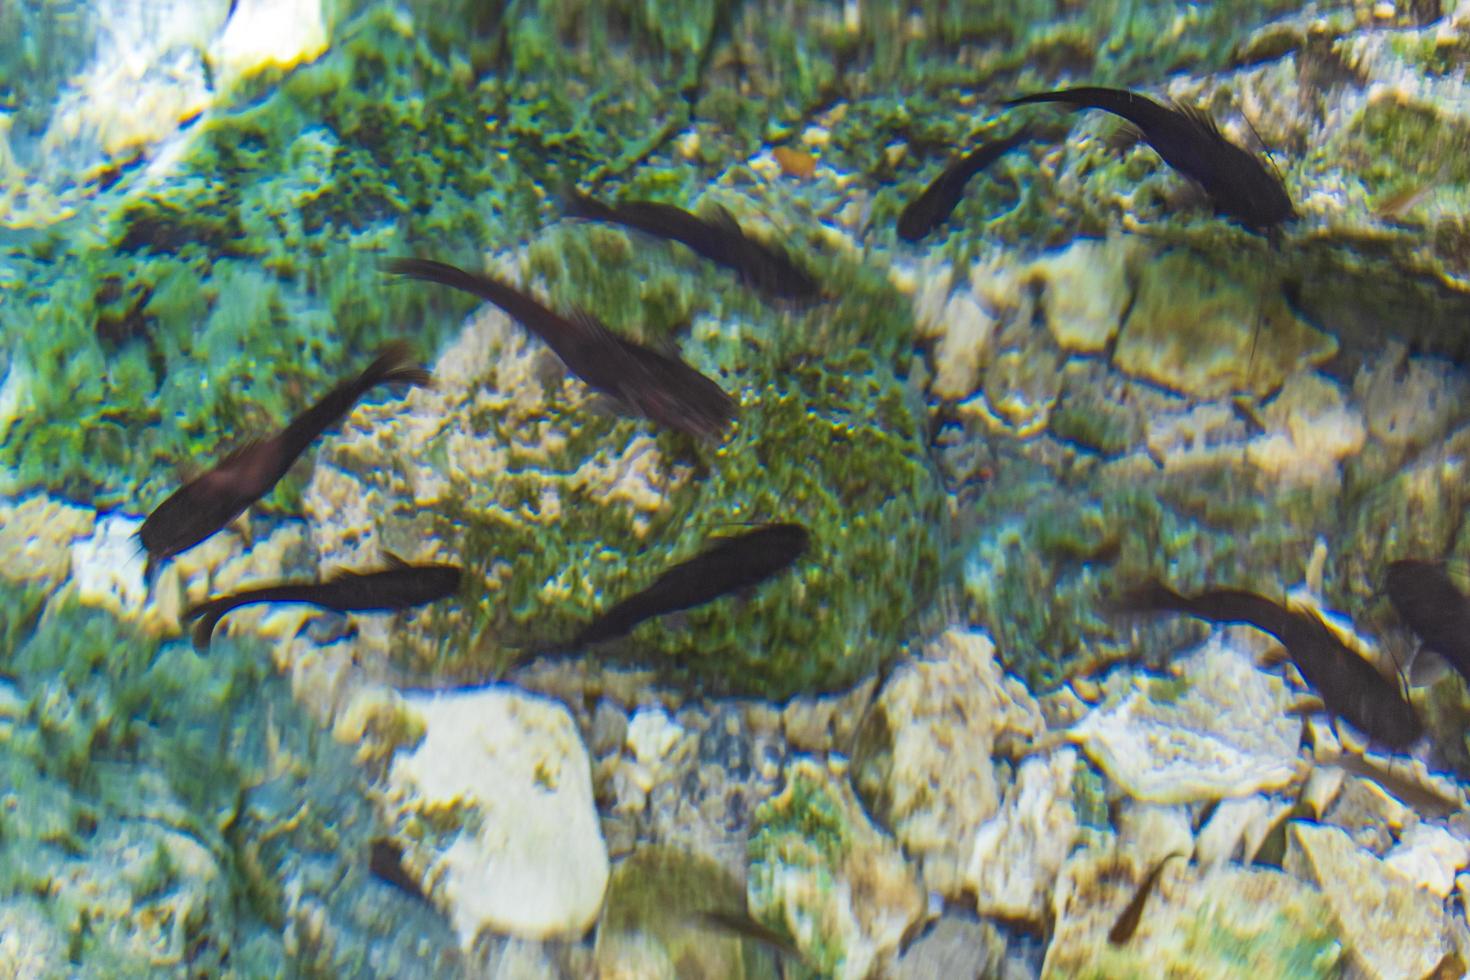 poisson poisson-chat nager dans l'eau cenote tajma ha mexico. photo